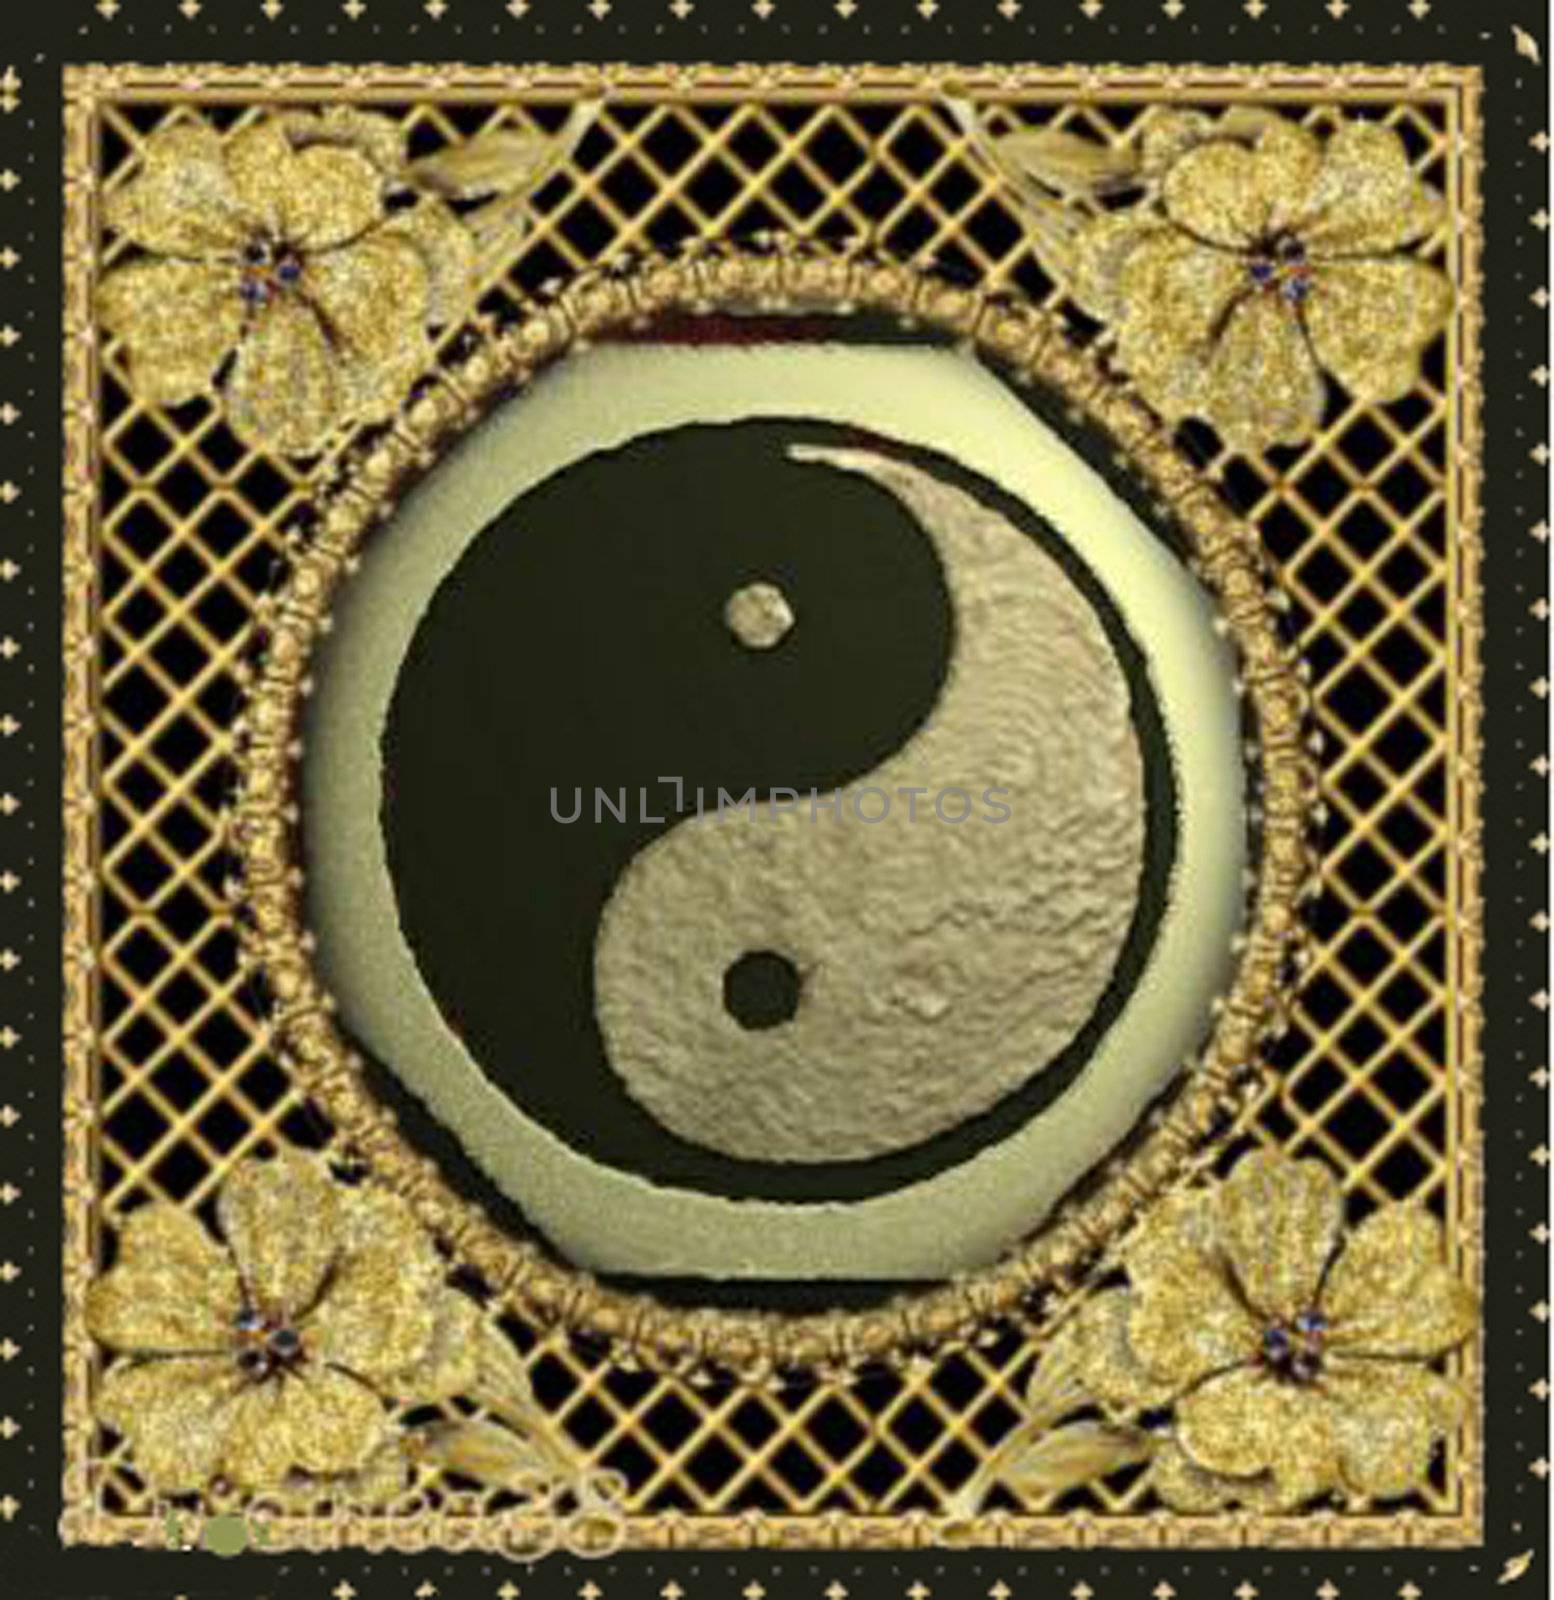 Gold Ying Yang Symbol on background  by Baltus